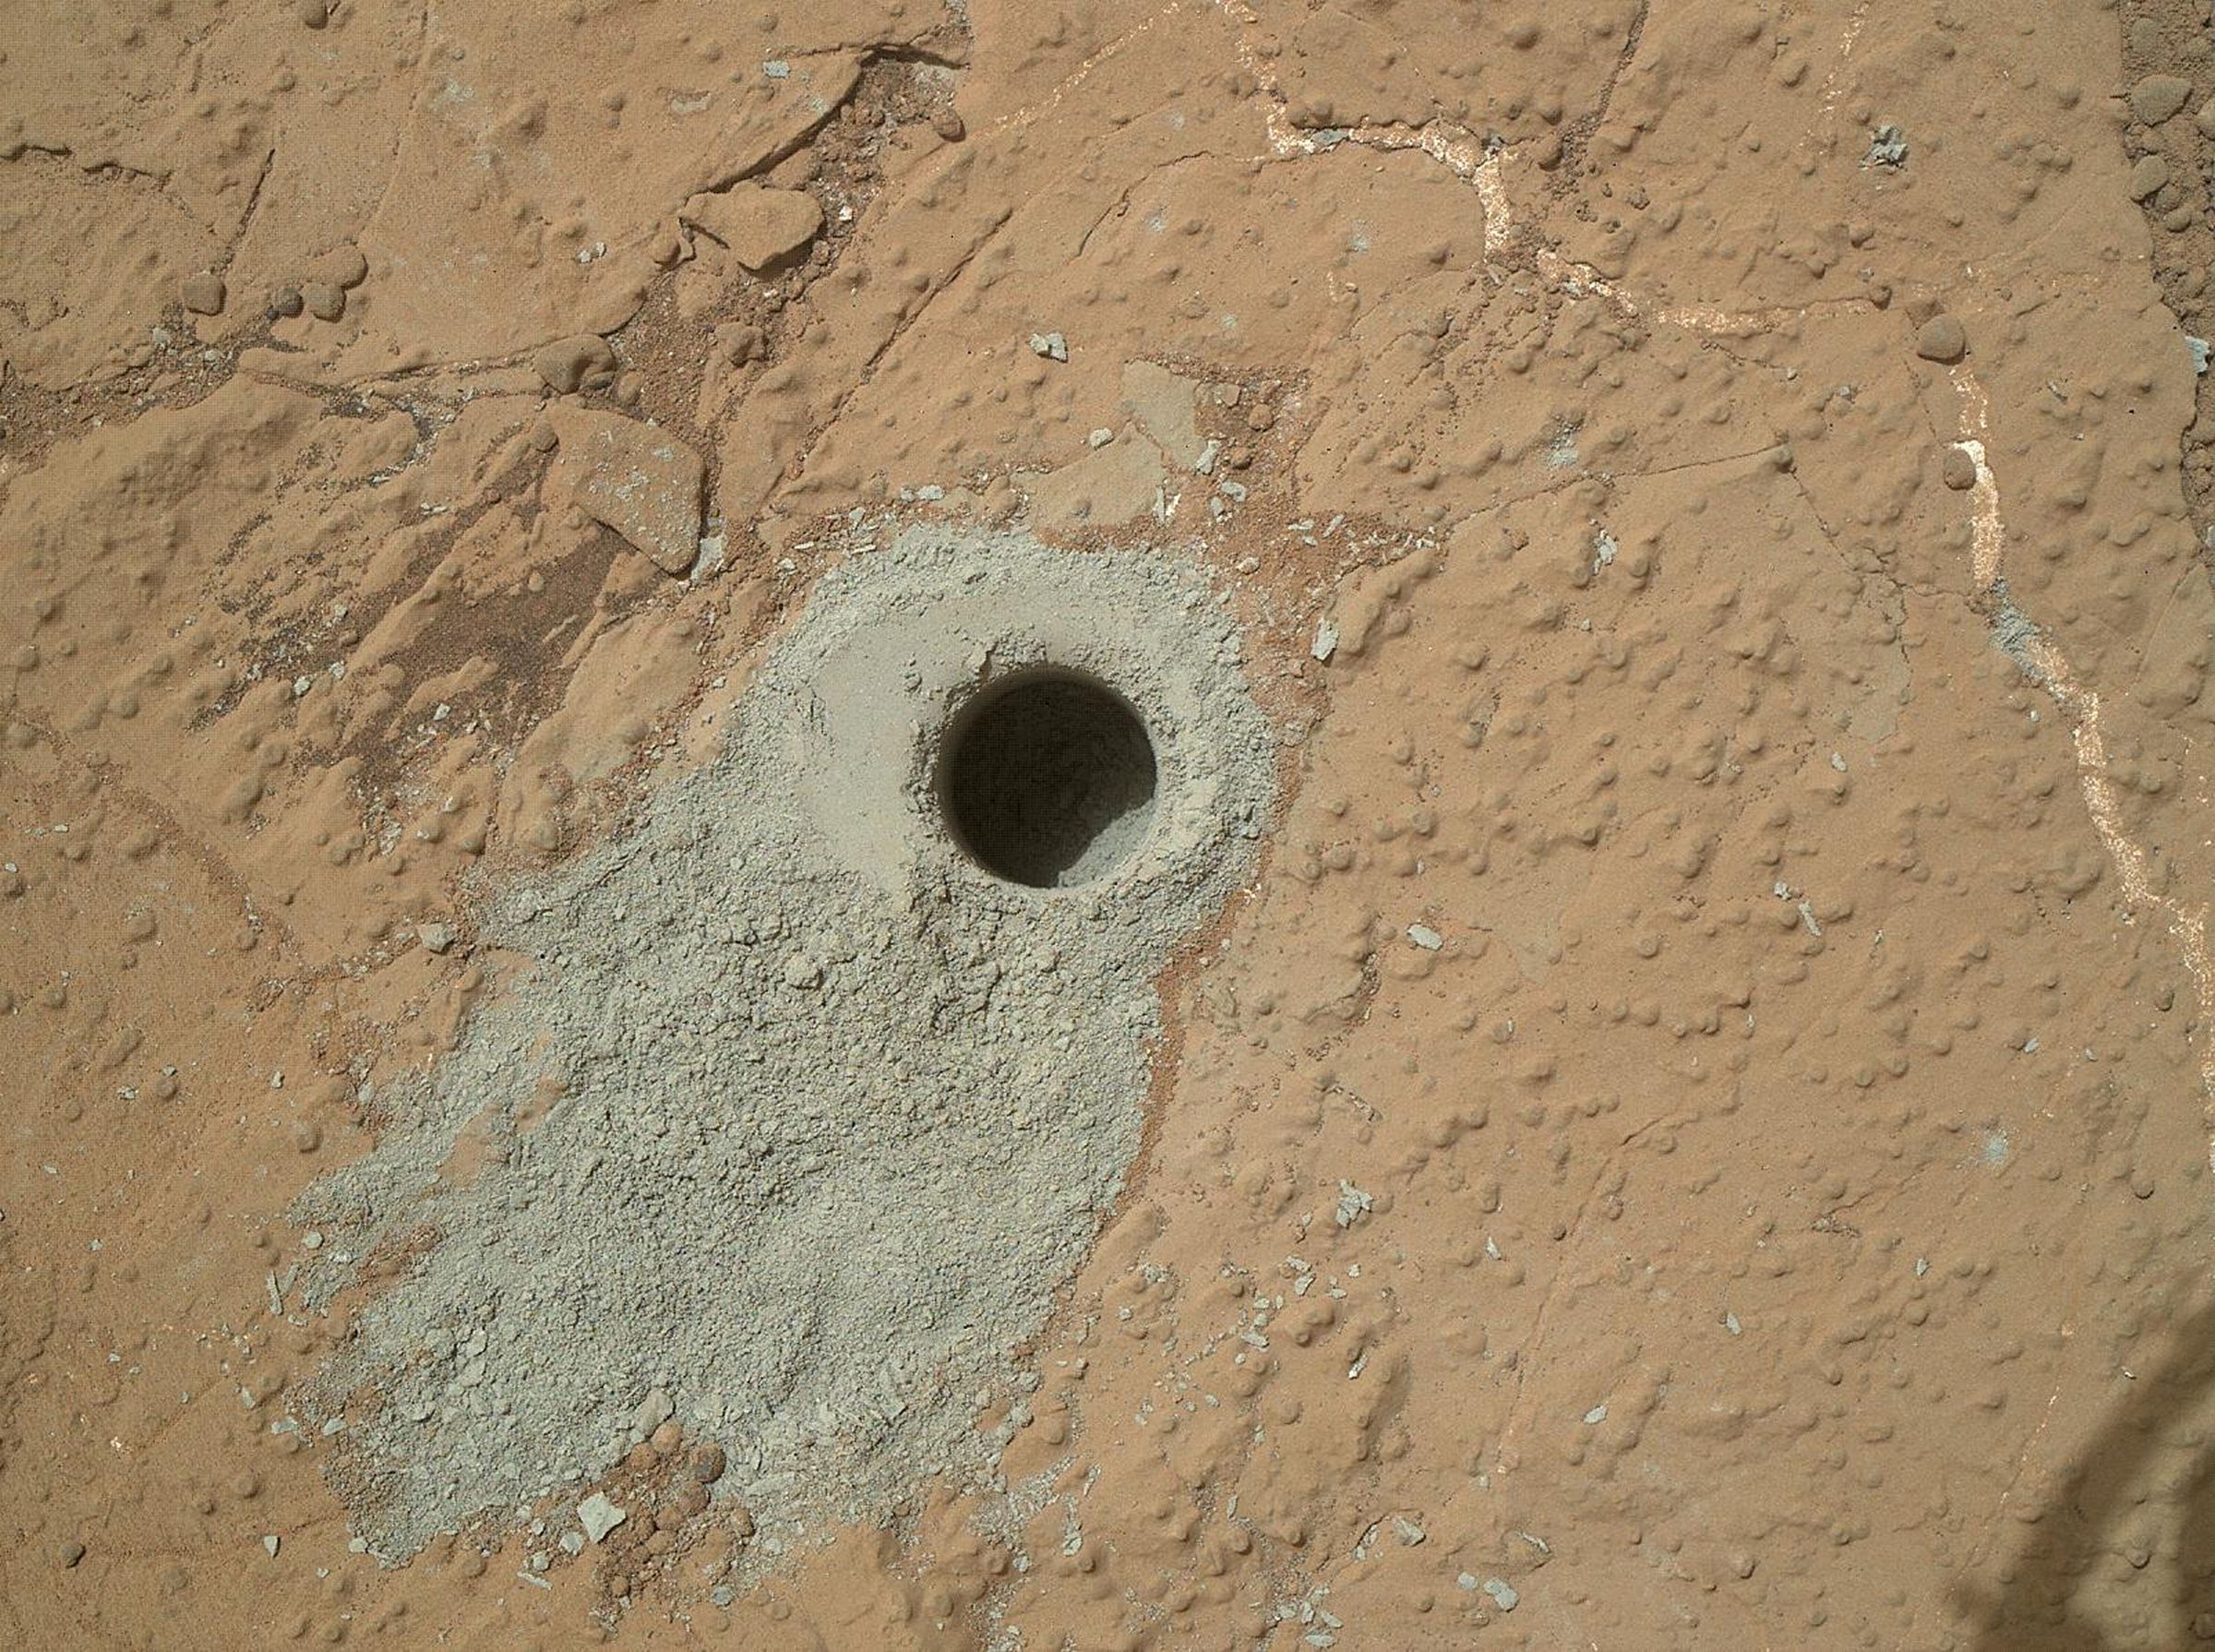 A drill hole made by Curiosity.